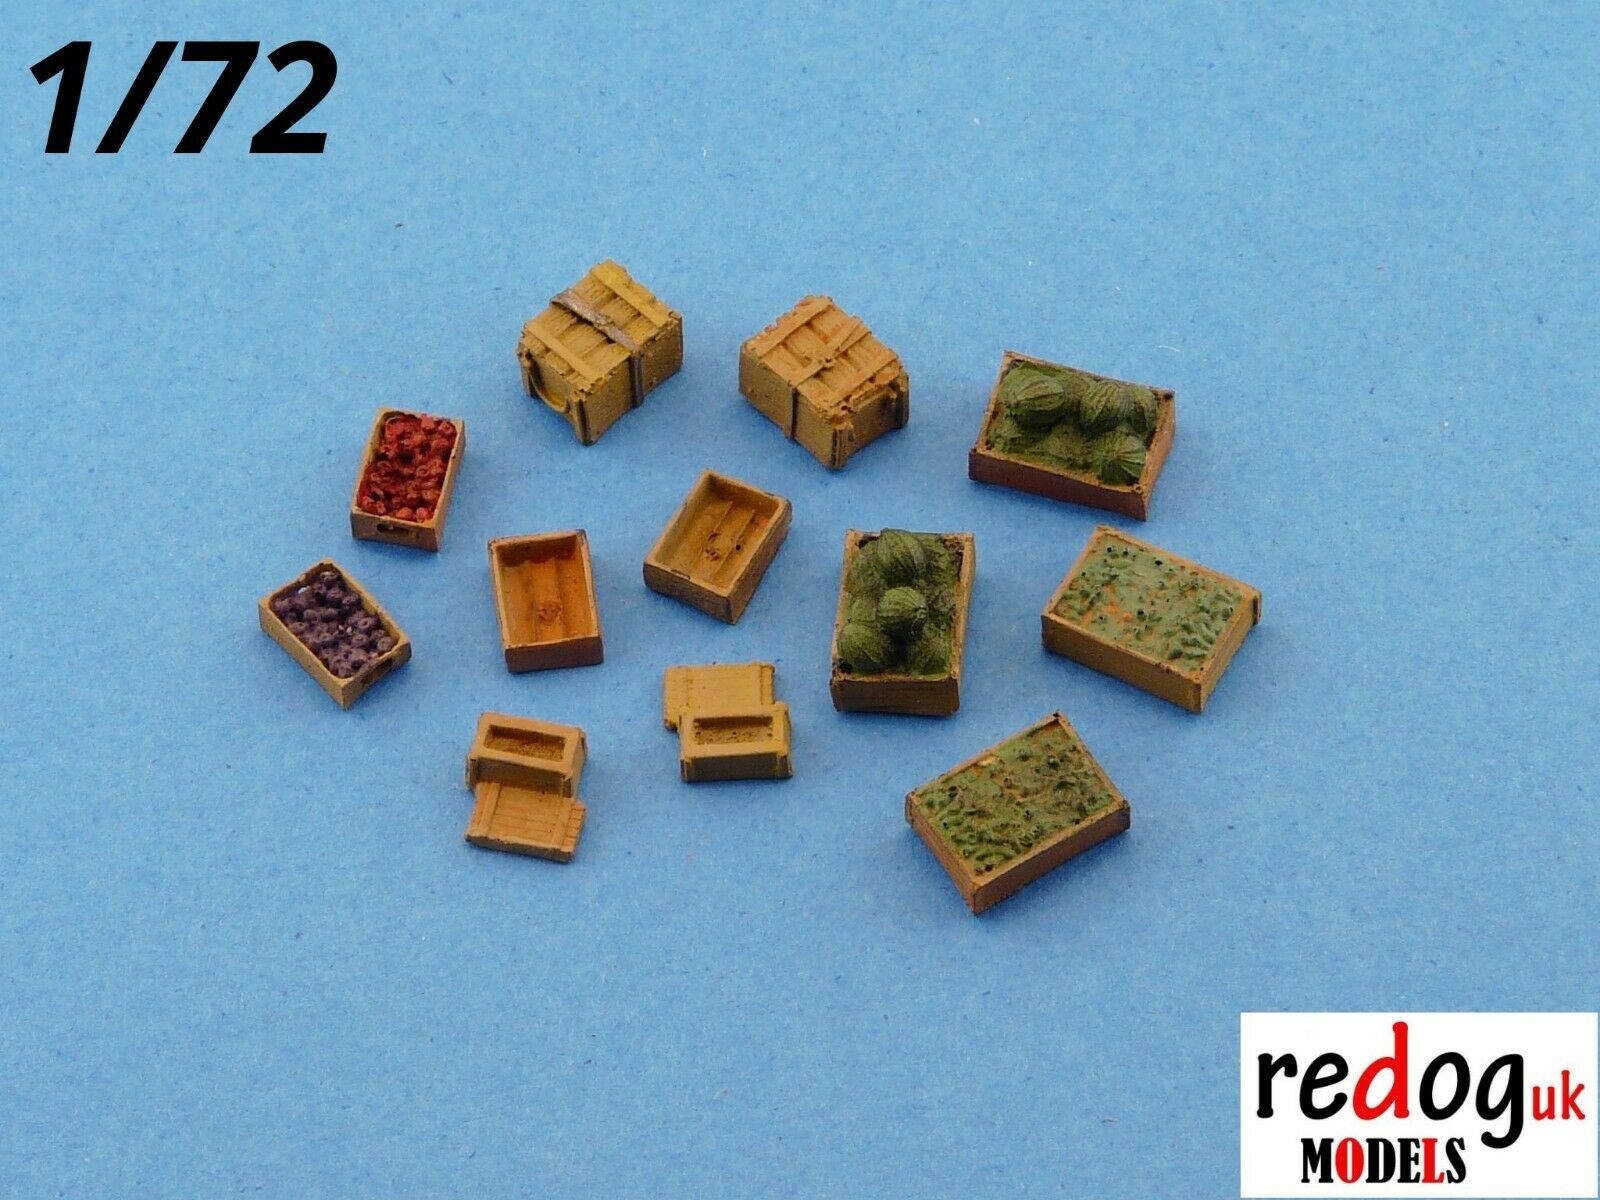 Redog 1:72:76 Food Supply Military Cargo Scale Modelling Stowage Diorama Accessorises - redoguk